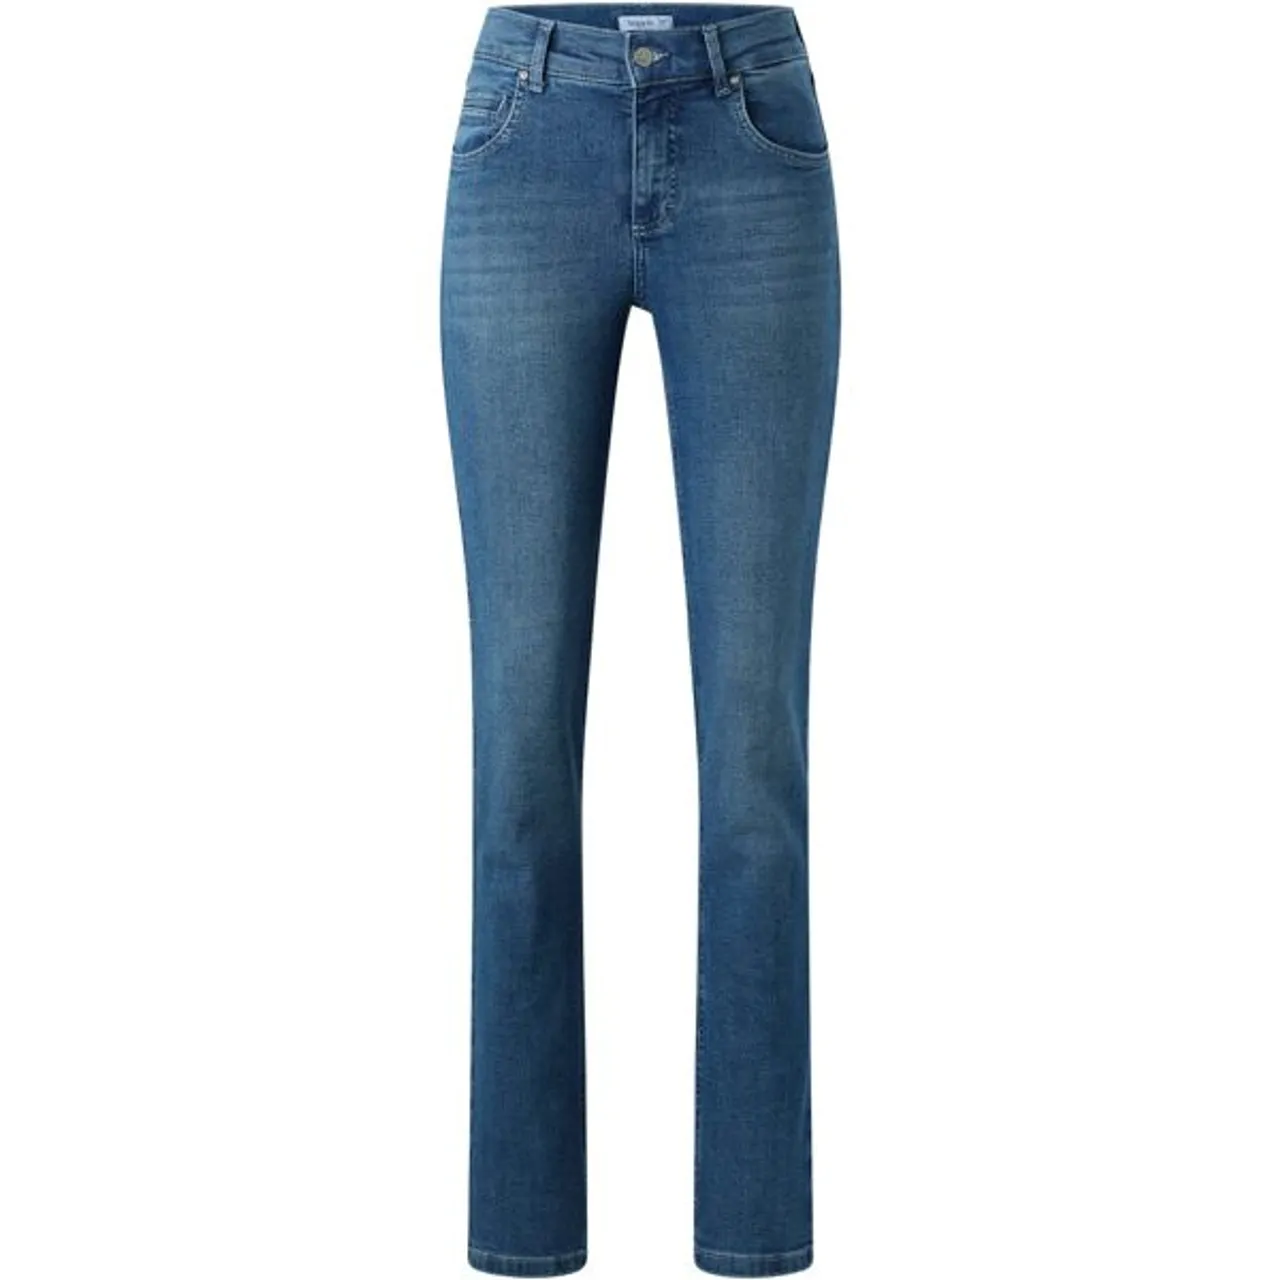 Slim-fit-Jeans ANGELS "Cici" Gr. 46, Länge 30, blau (mid blue used) Damen Jeans Röhrenjeans